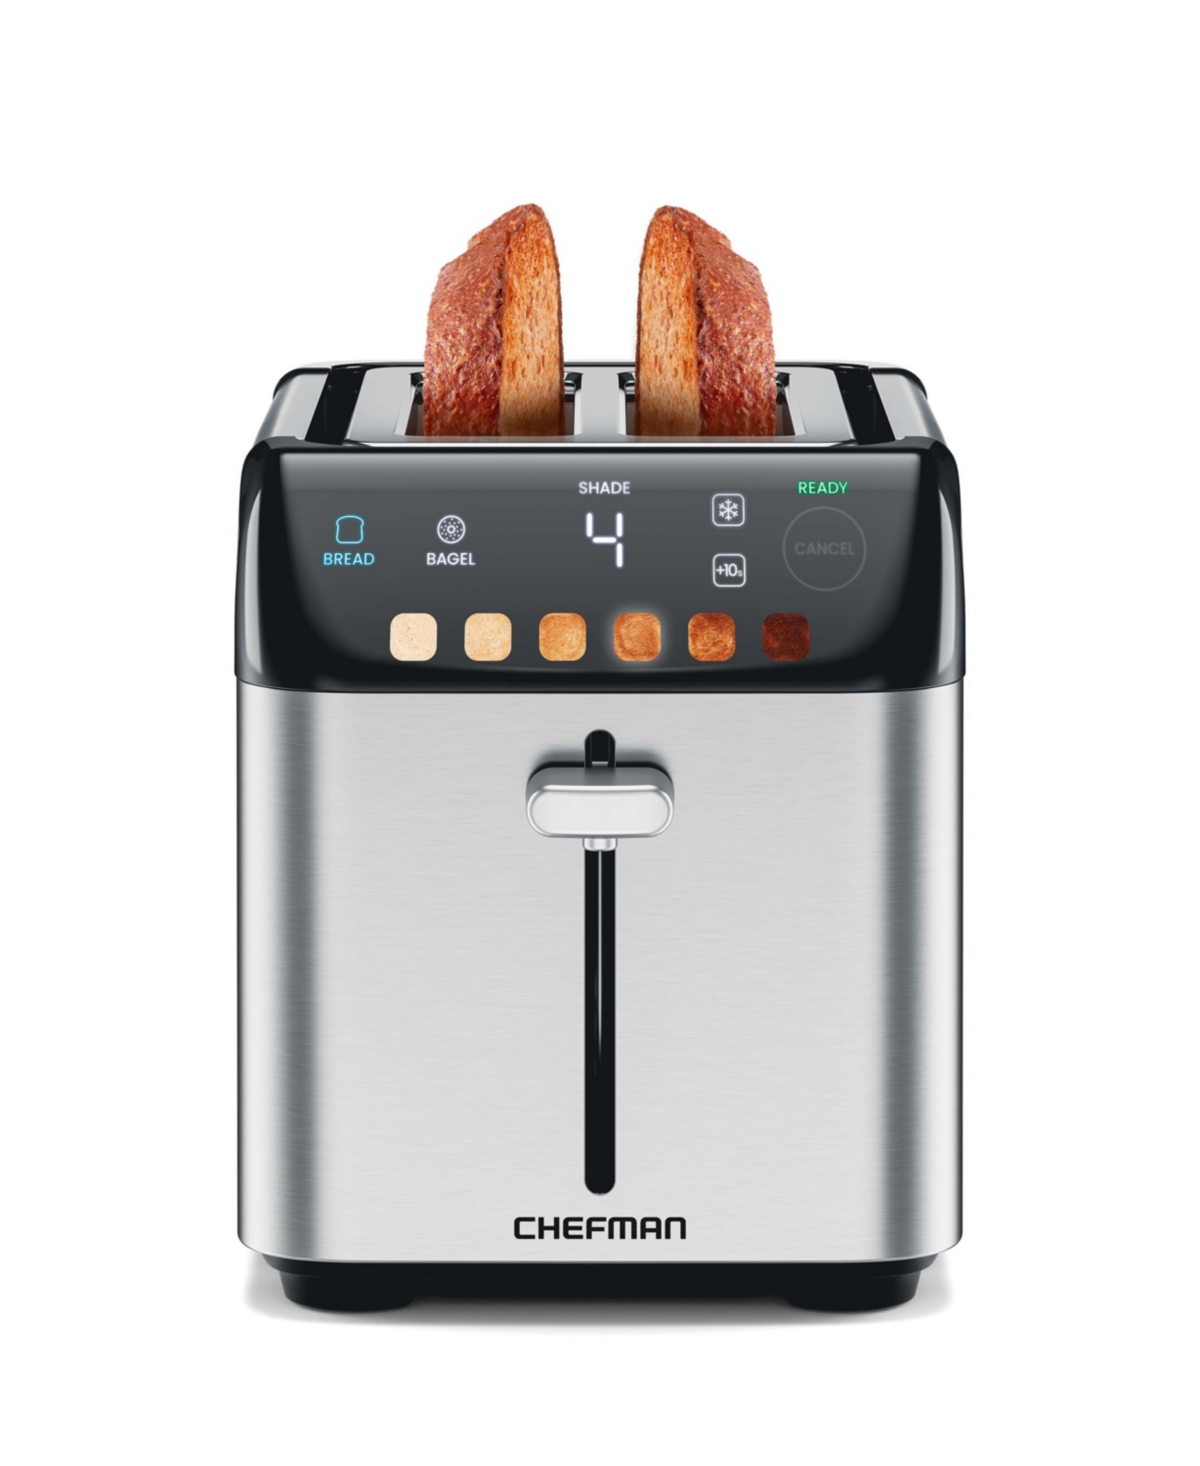 Chefman Smart Toaster 2 Slice In Stainless